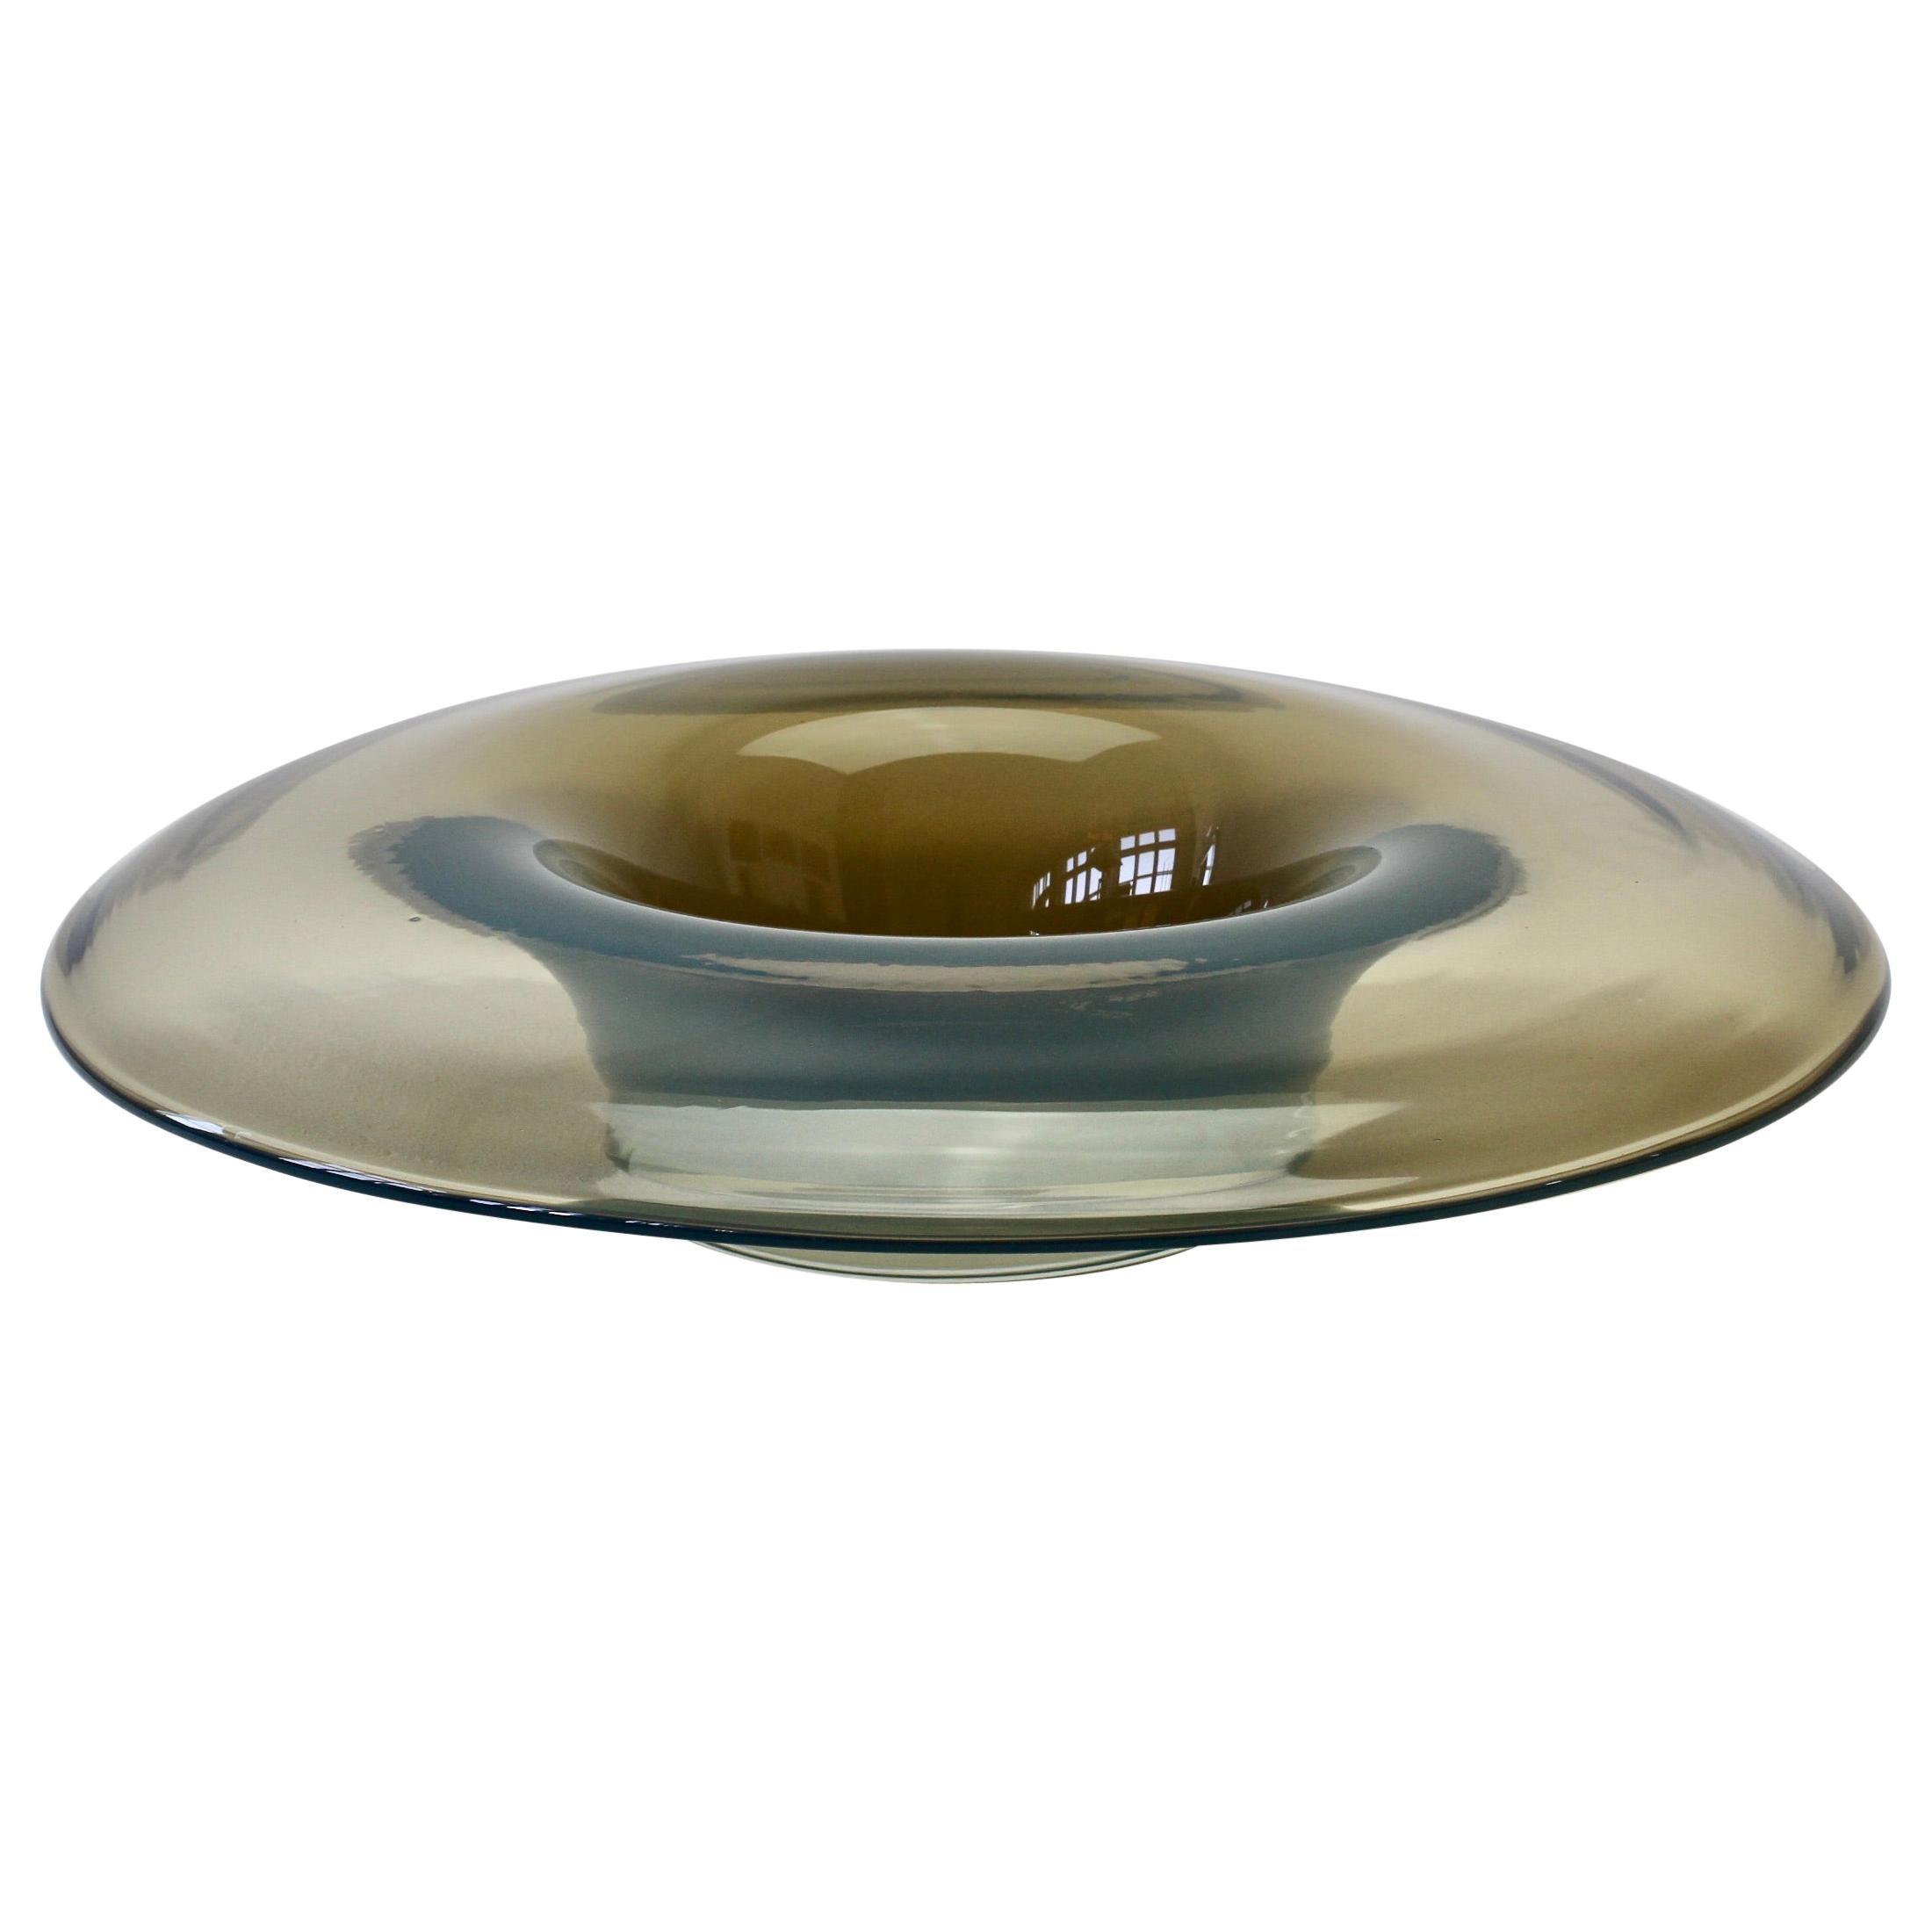 Antonio da Ros for Cenedese Vintage Italian Murano Opaline Glass Serving Bowl